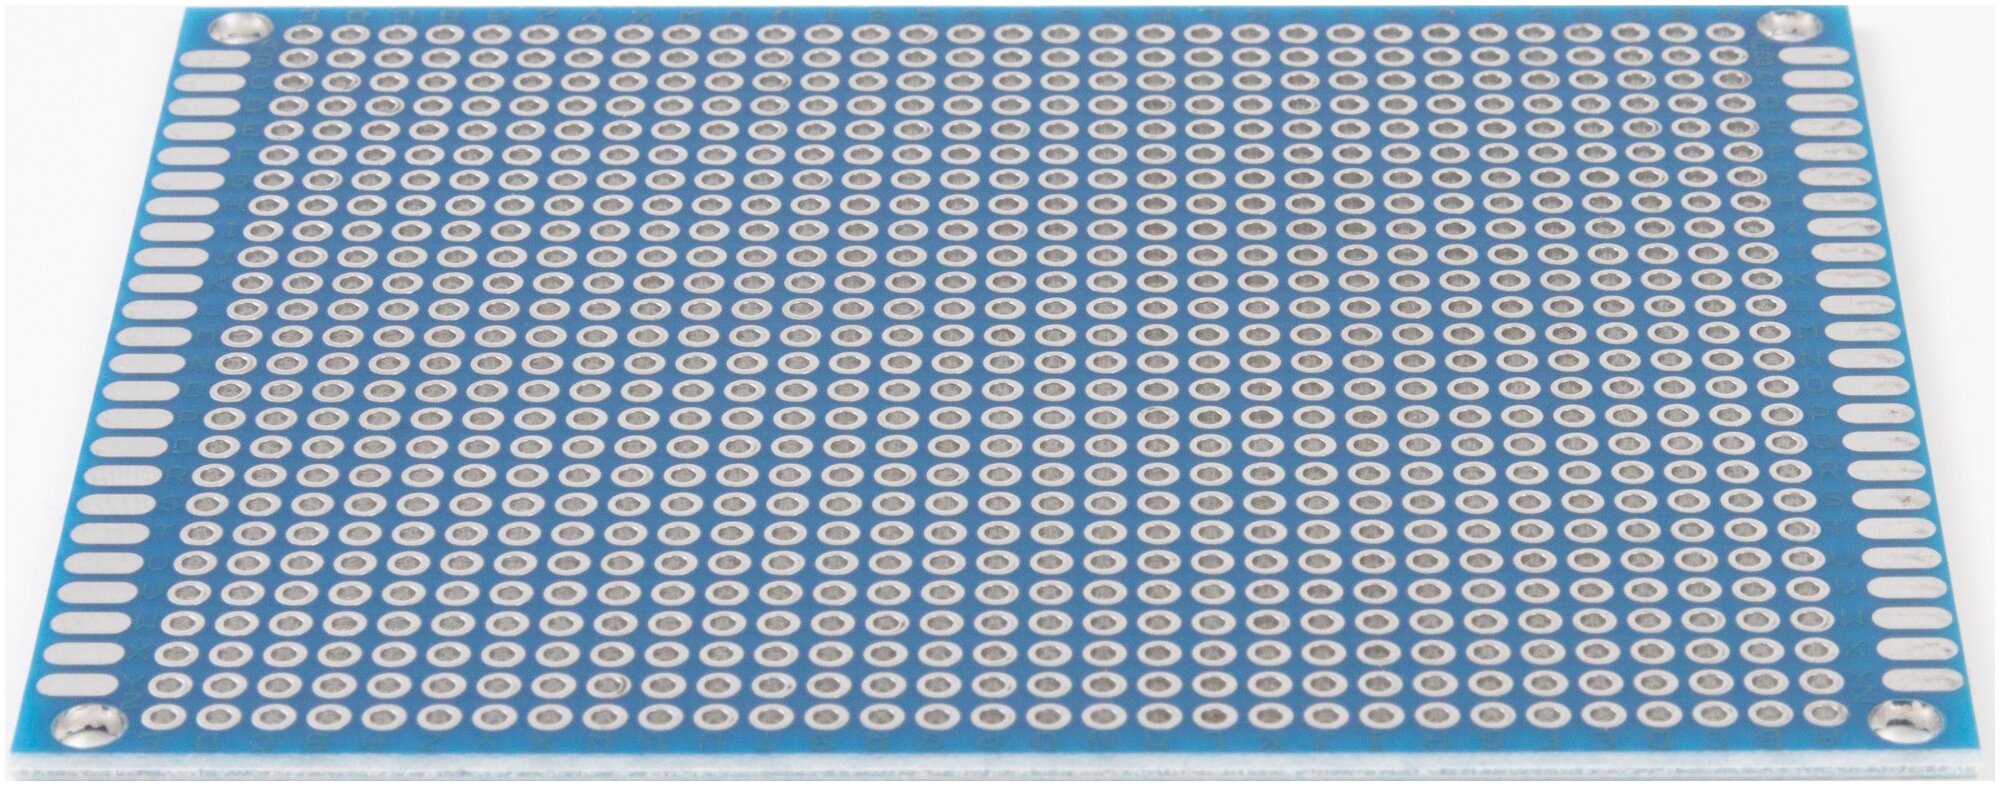 Печатная макетная плата 7 х 9 см двухсторонняя для пайки GSMIN PCB2 (Синий)